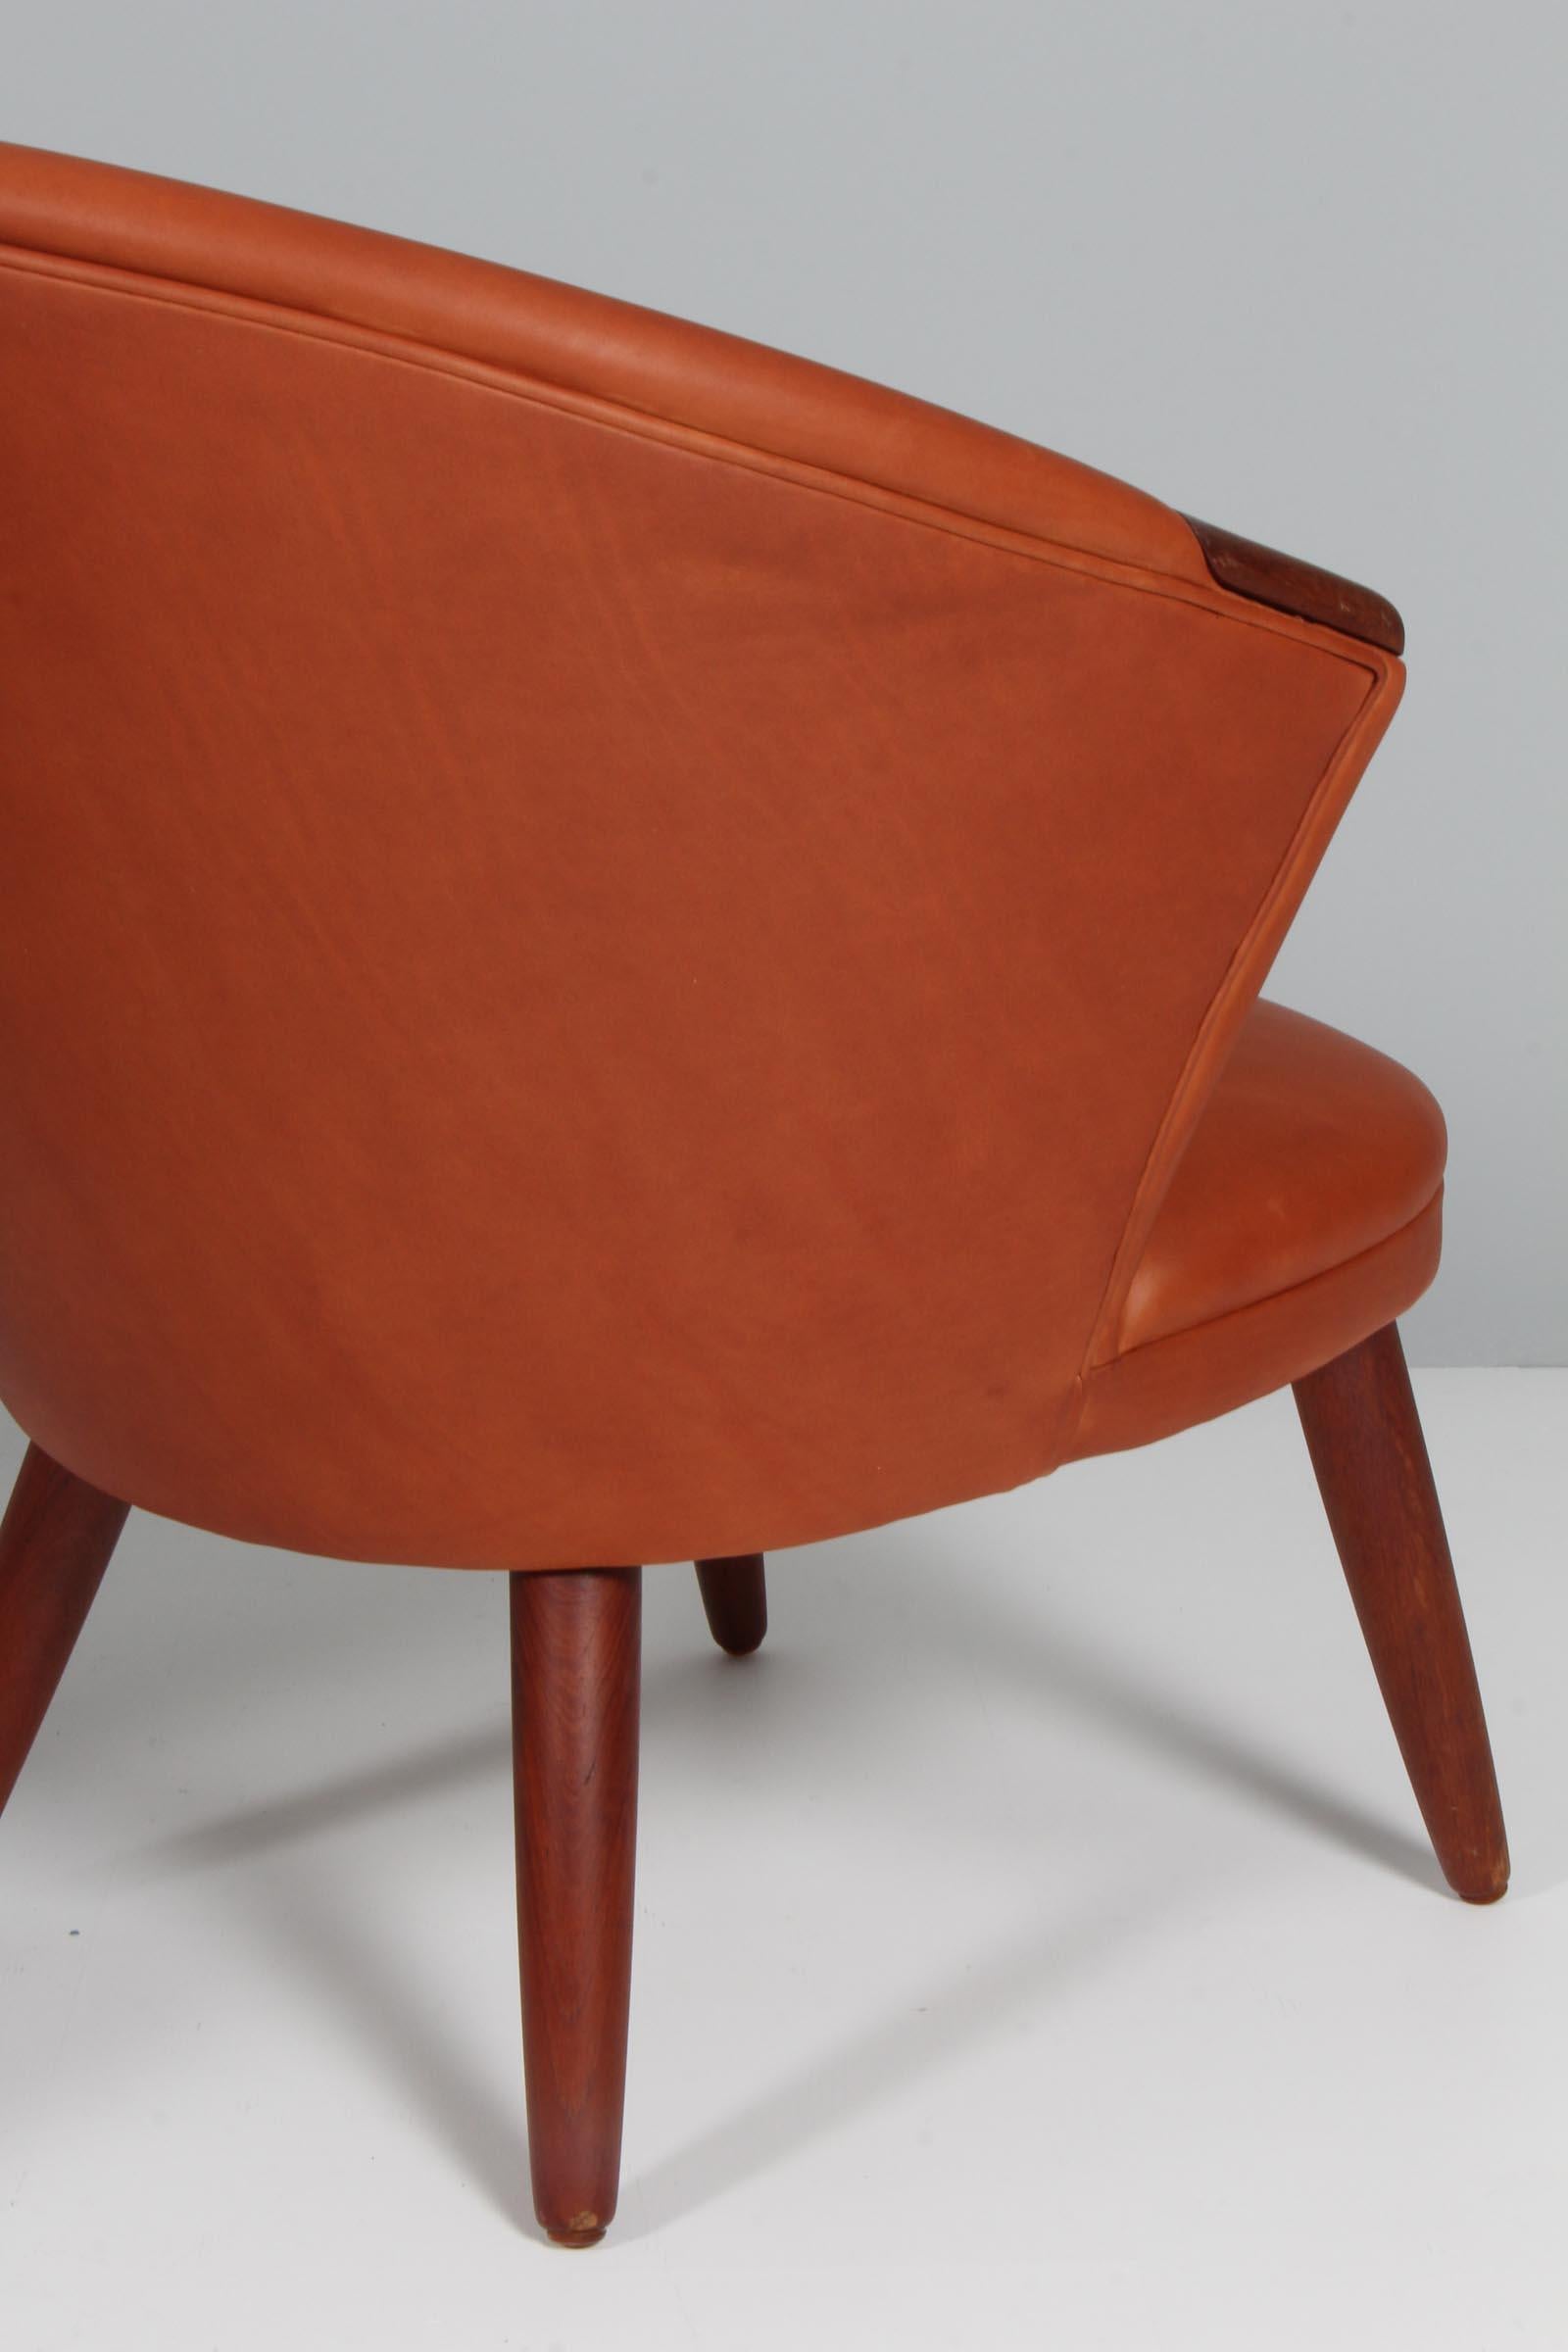 Leather Danish Mid-Century Lounge Chair, Designed by Bent Møller Jepsen, 1960s